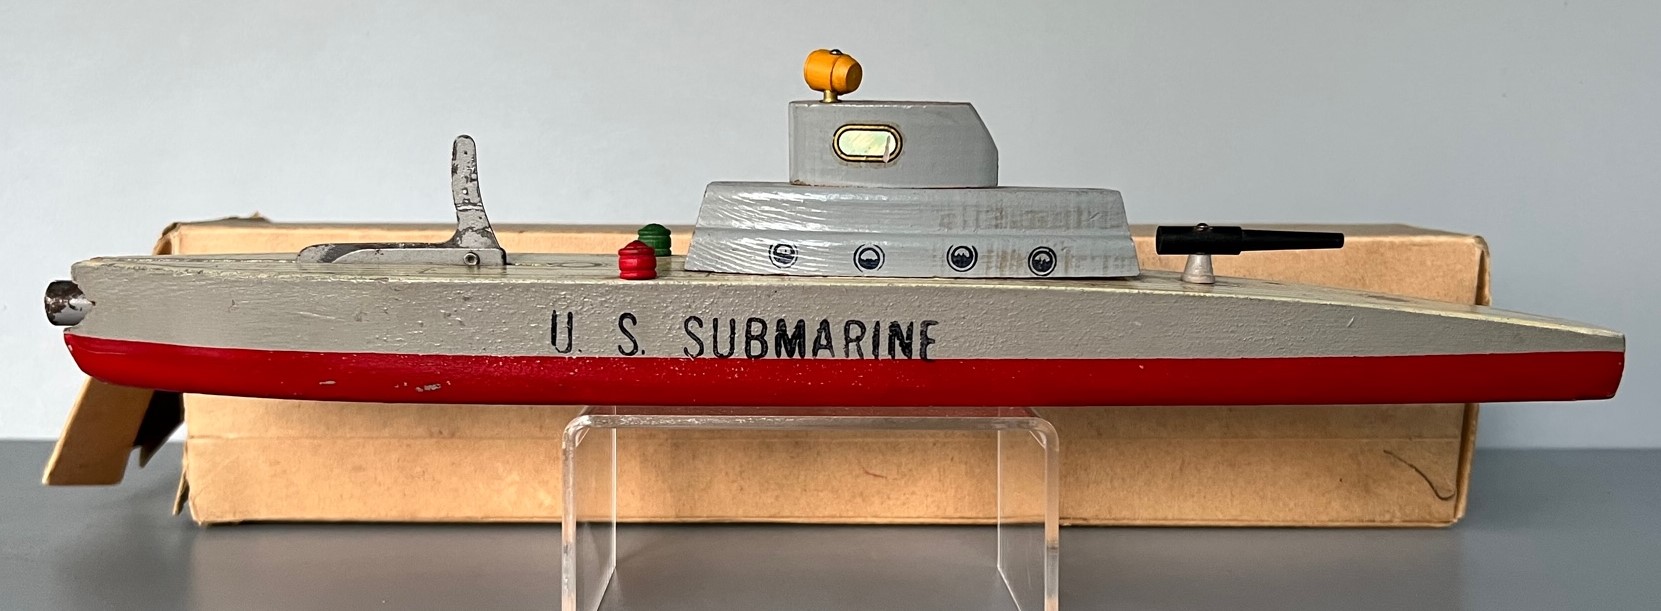 507 Submarine